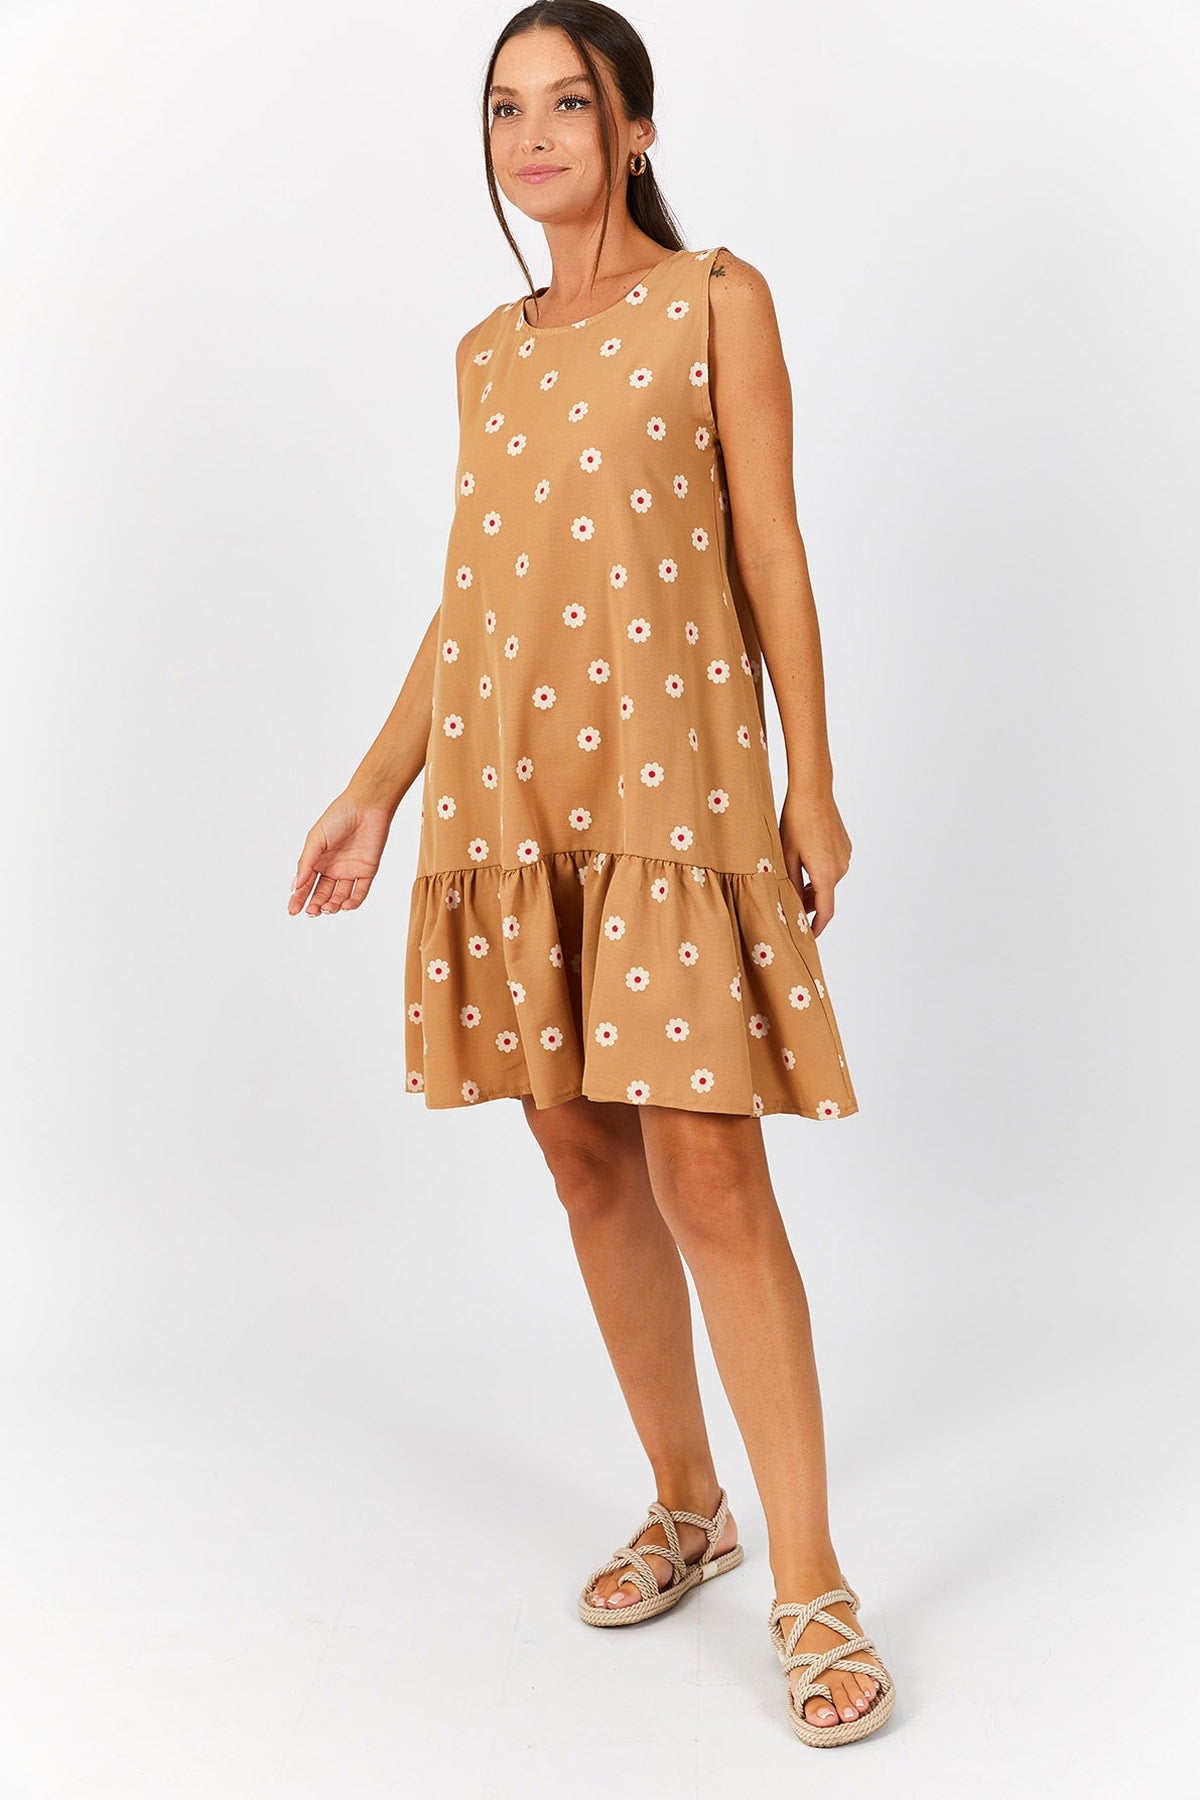 Female Beige Daisy Pattern Sleeveless Skirt Ruffled Dress ARM-22Y001123